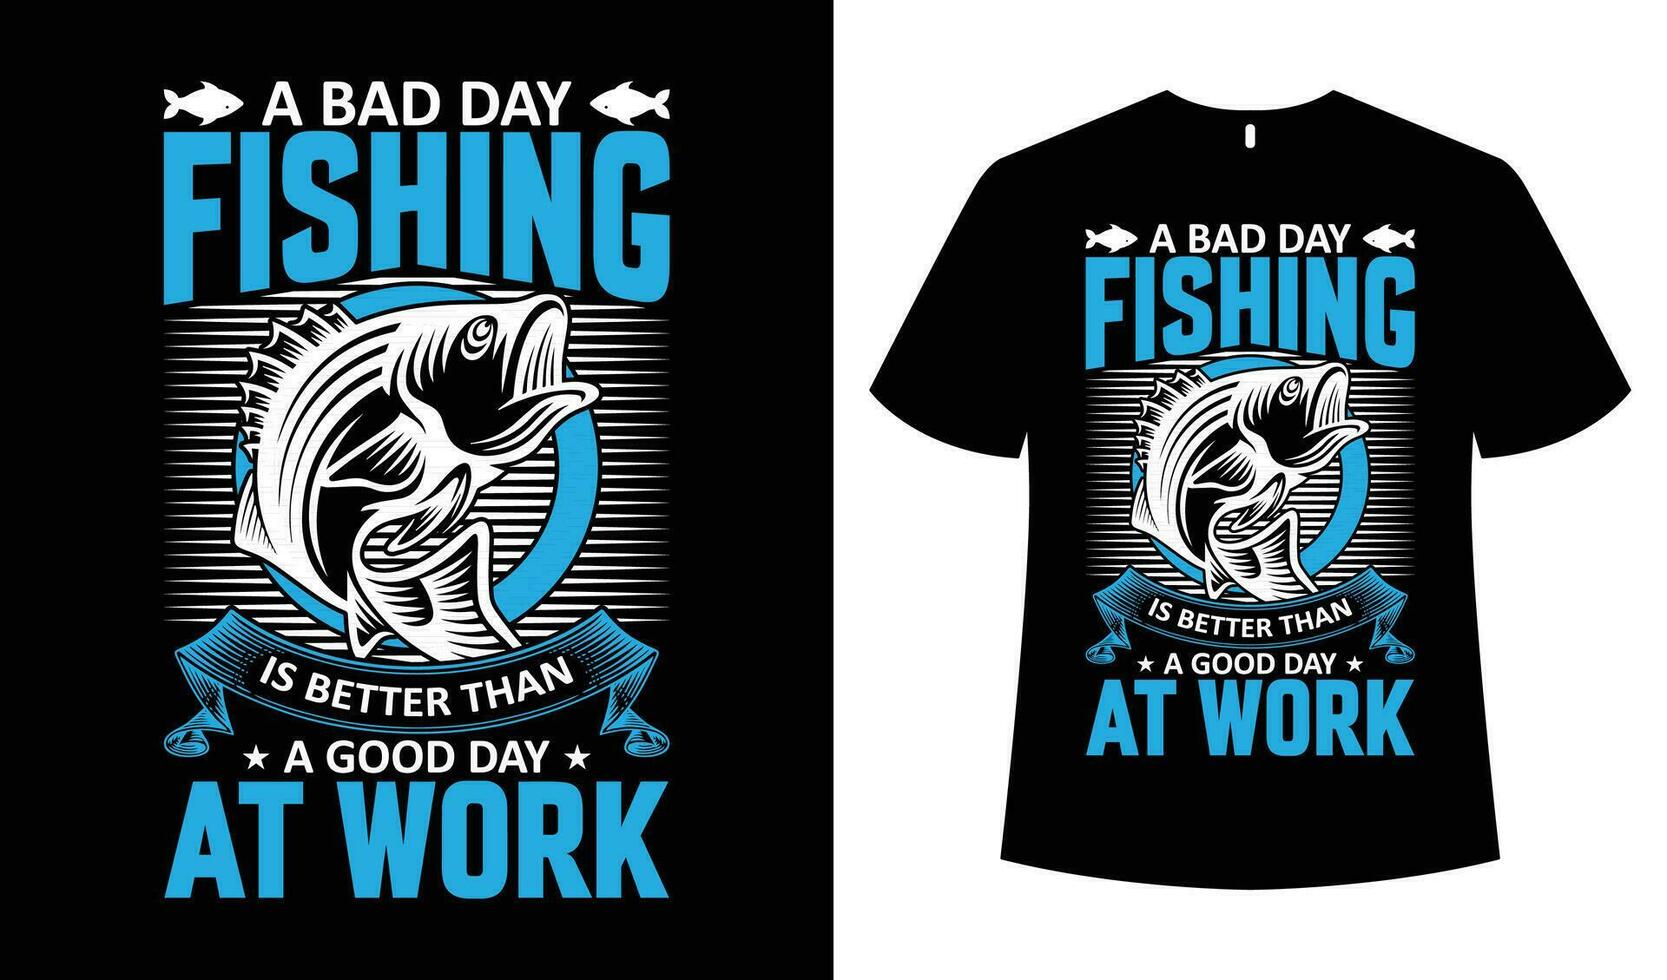 Fishing T-shirt Design Template Image. vector